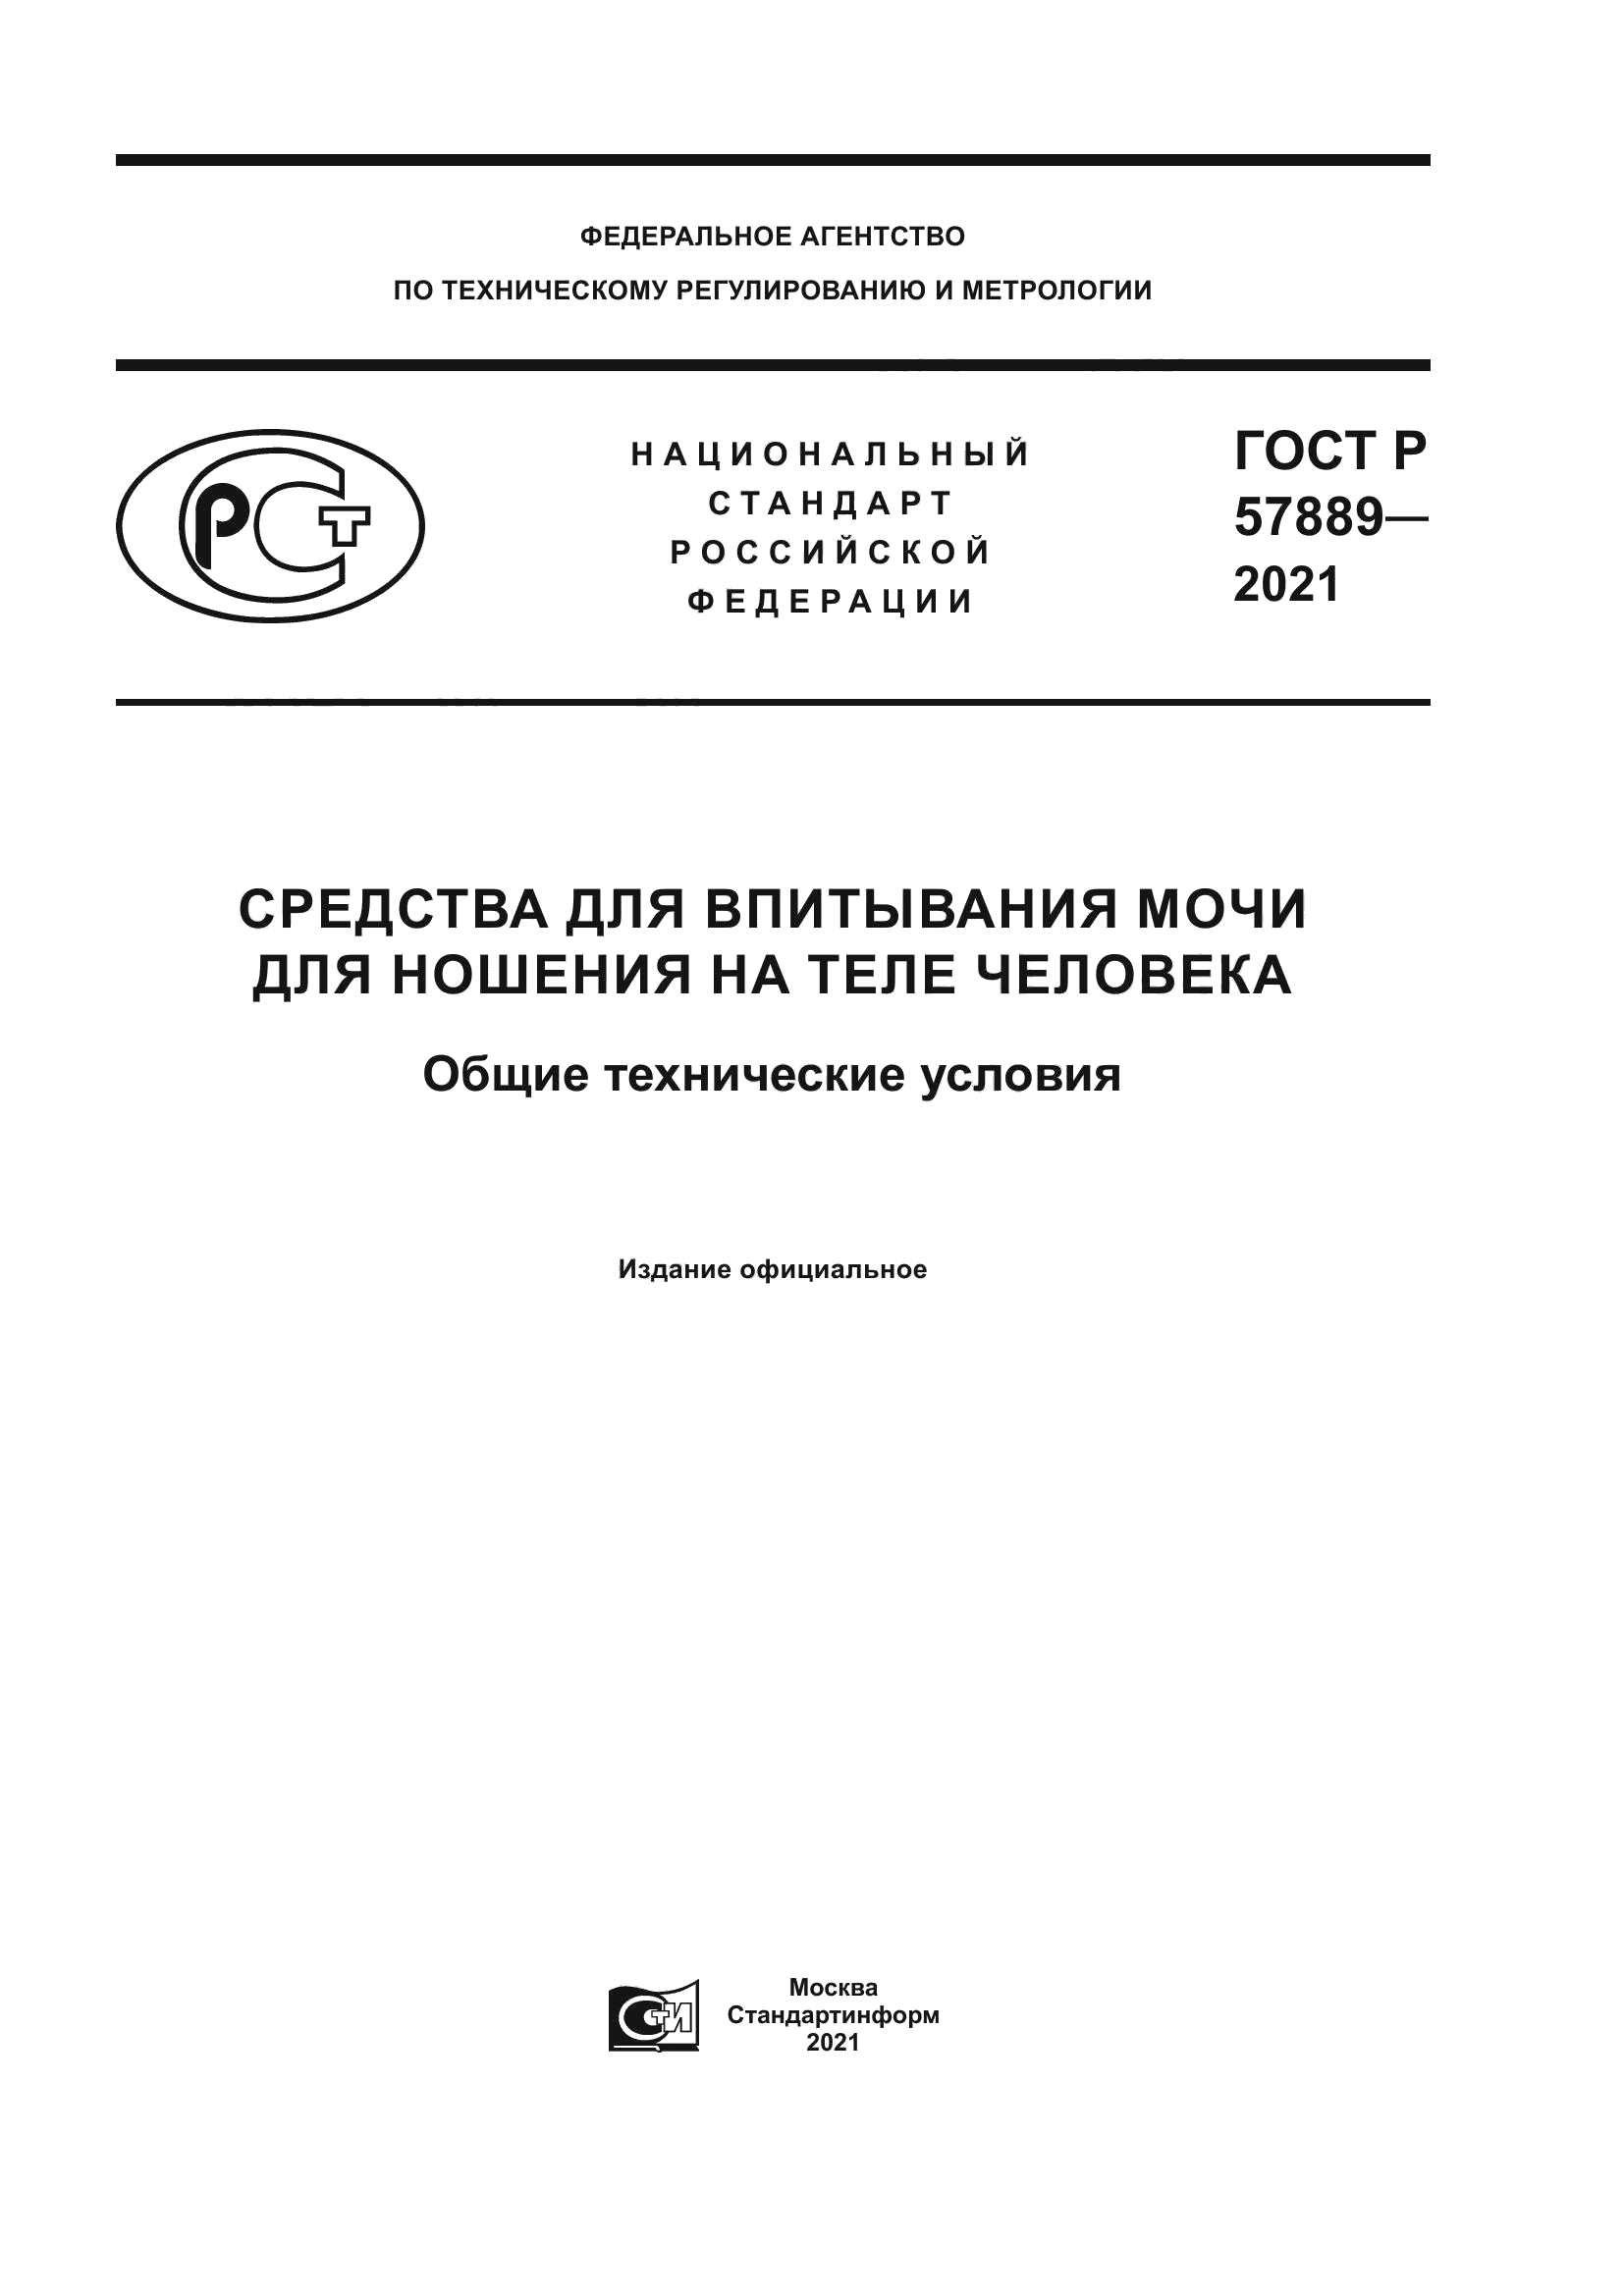 ГОСТ Р 57889-2021